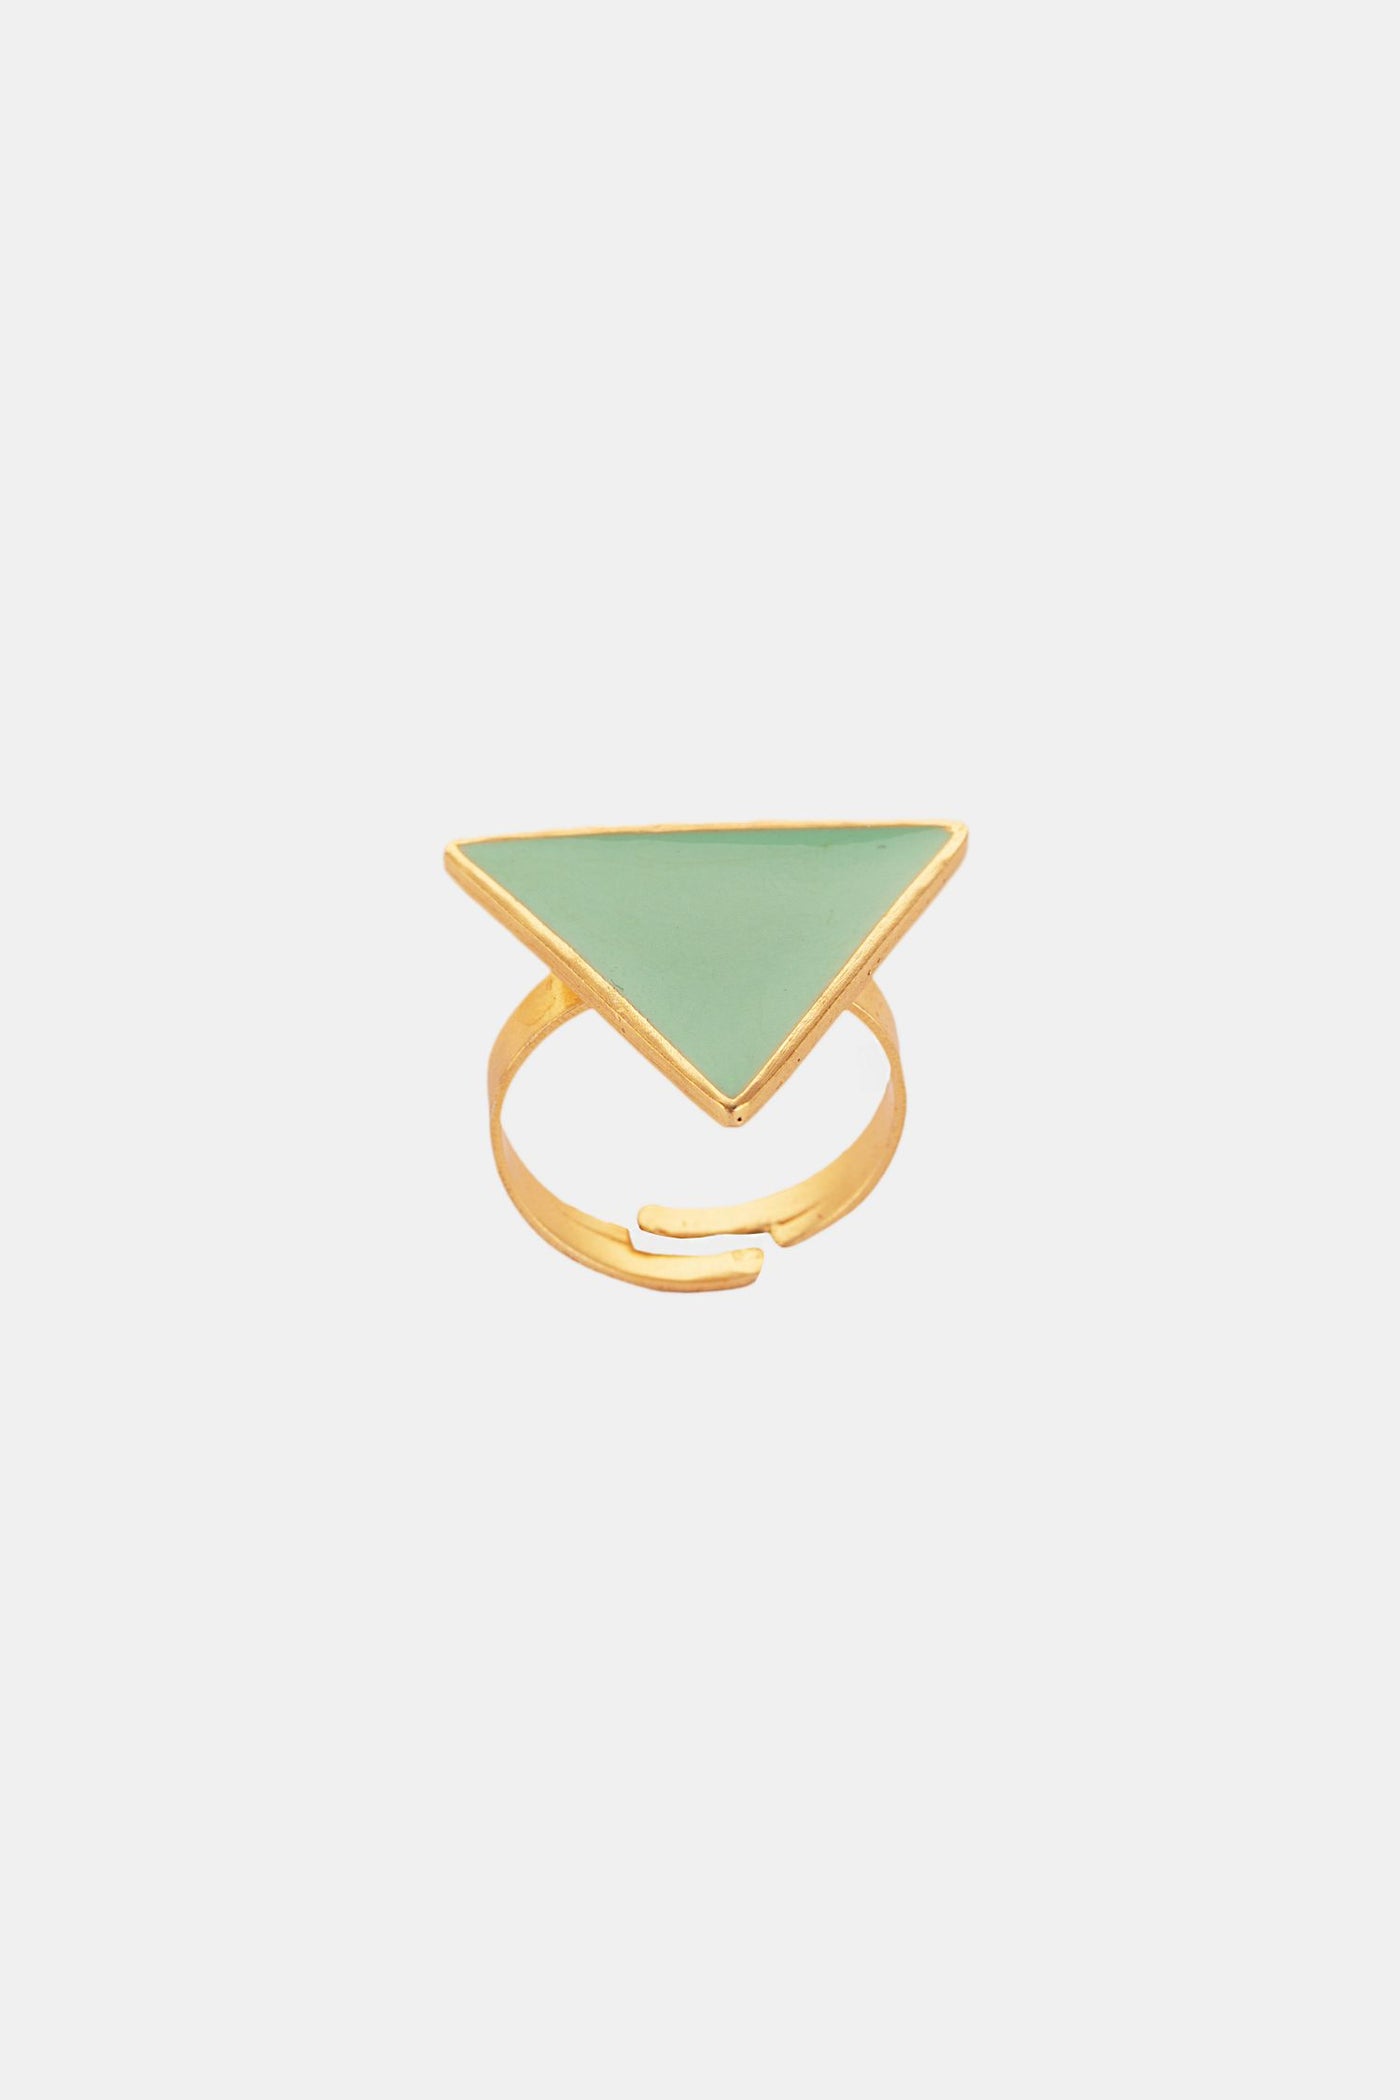 Sea Green Stone Golden Ring